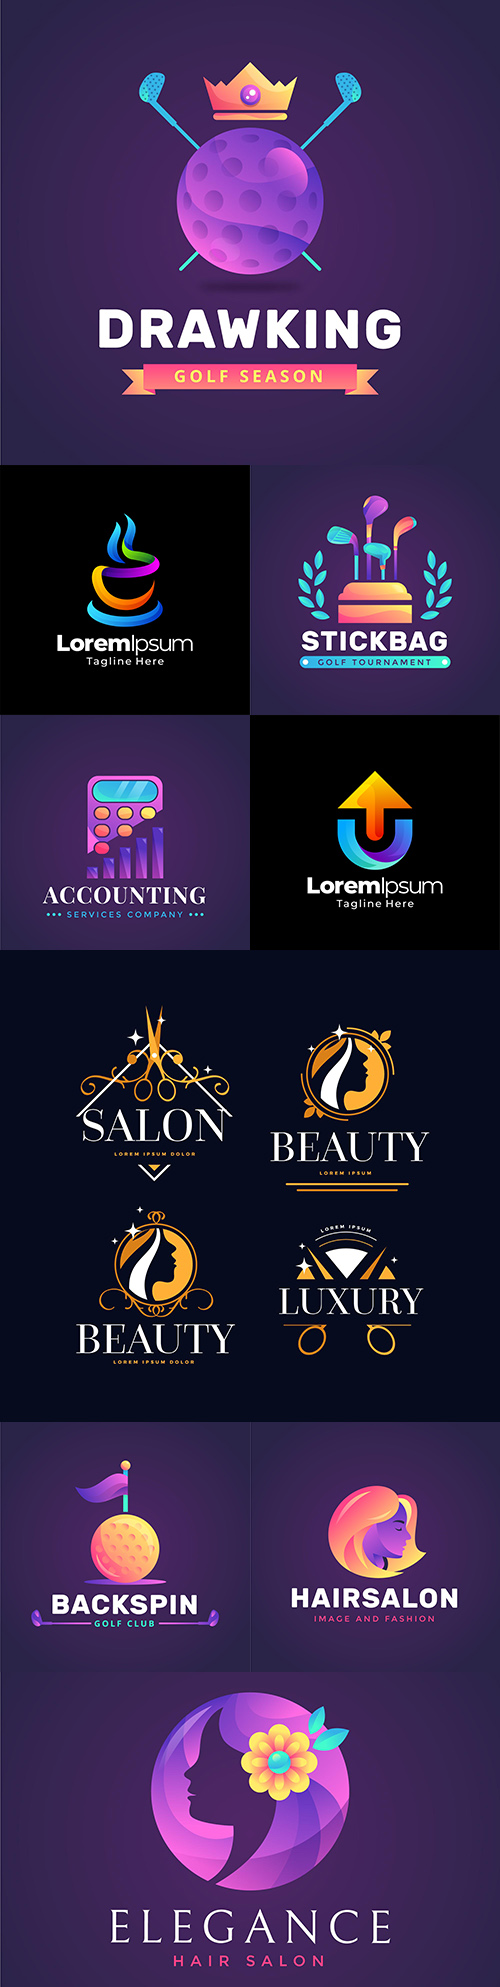 Brand name company business corporate logos design 6
